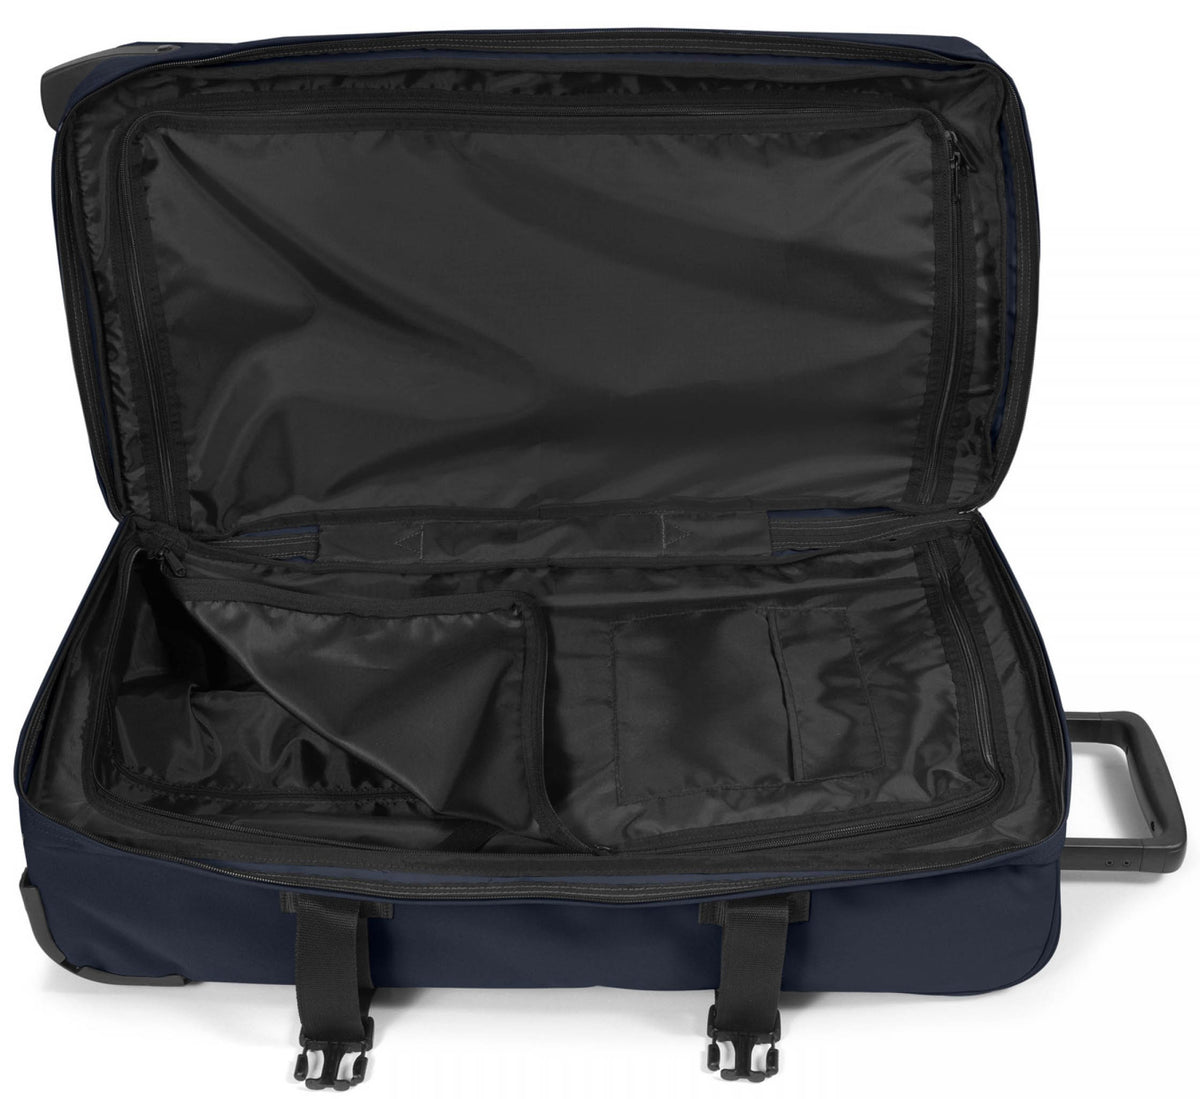 Eastpak Tranverz M Suitcase - Ultra Marine